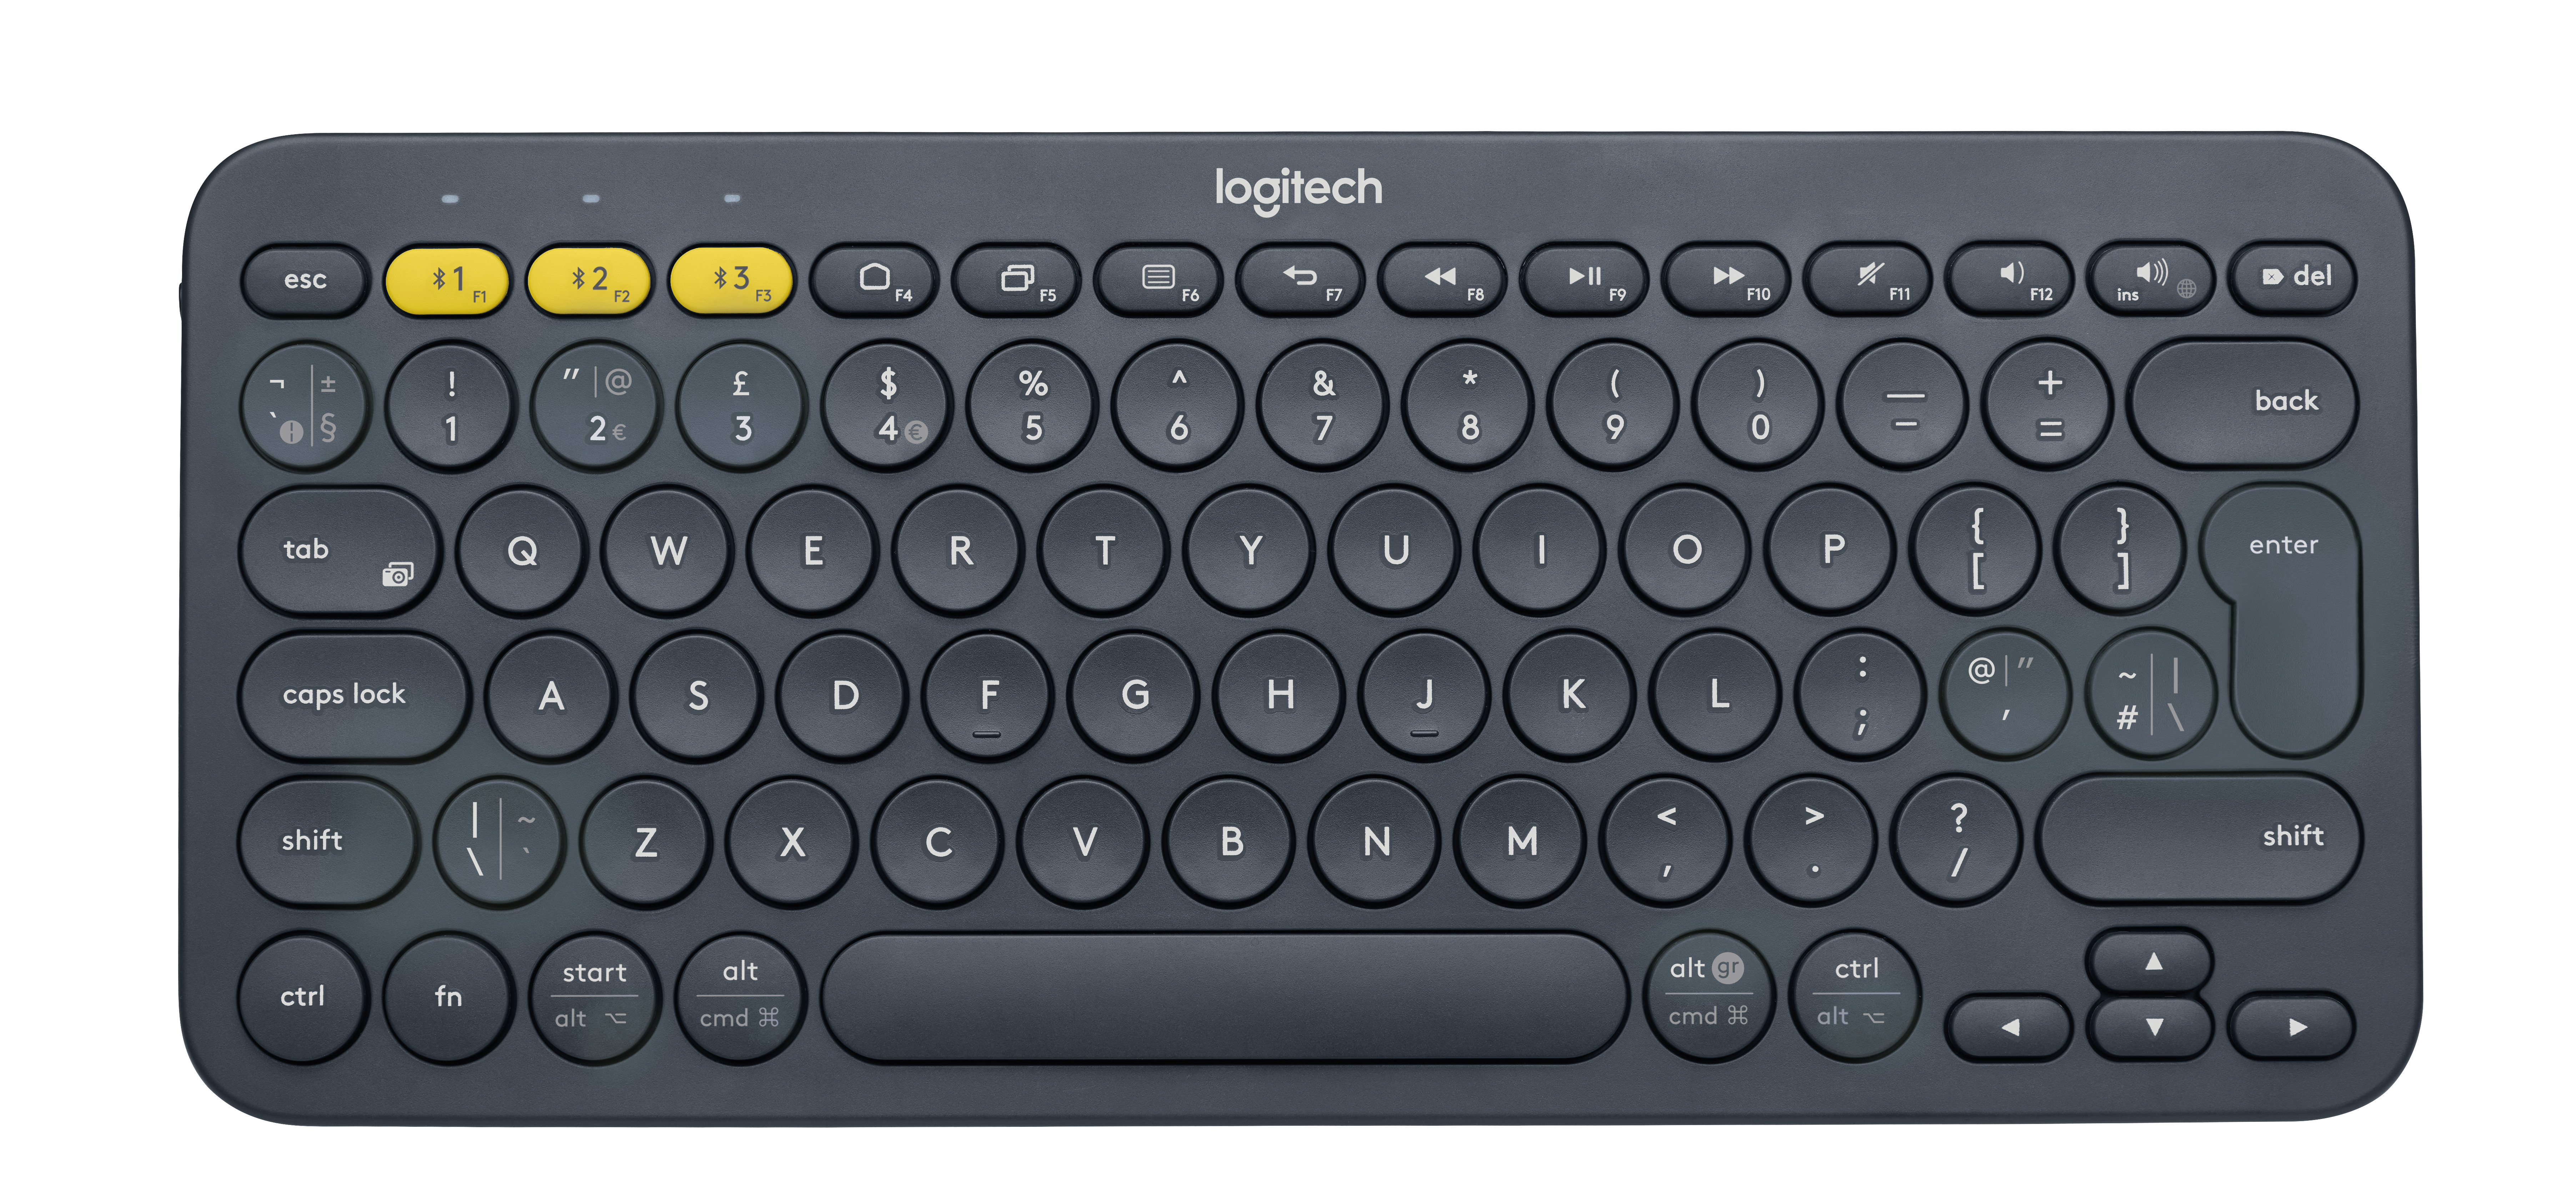 logitech k380 键盘和桌面 蓝牙 qwerty pan nordic 北欧语言键盘配置